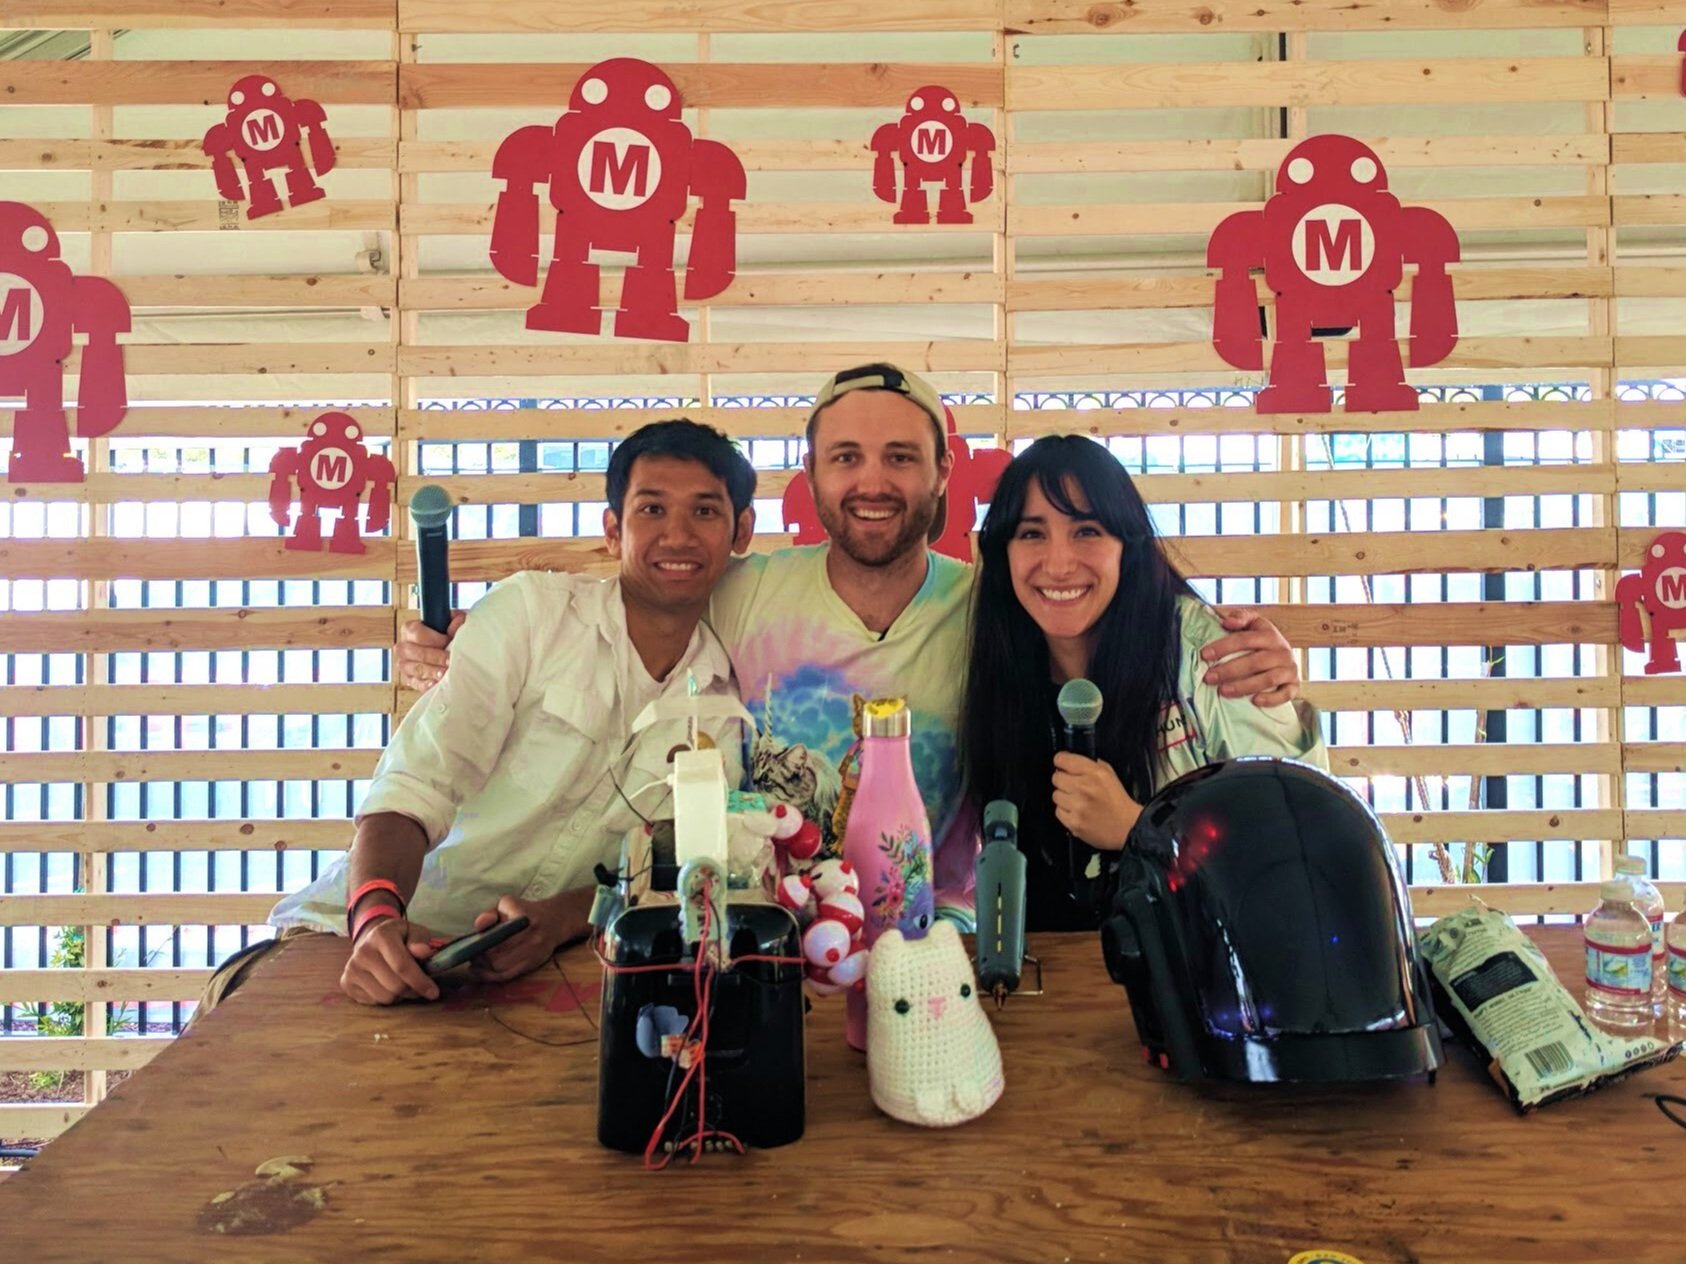 Peter Sripol, William Osman, and Estefannie at Maker Faire - San Mateo, CA May 2018